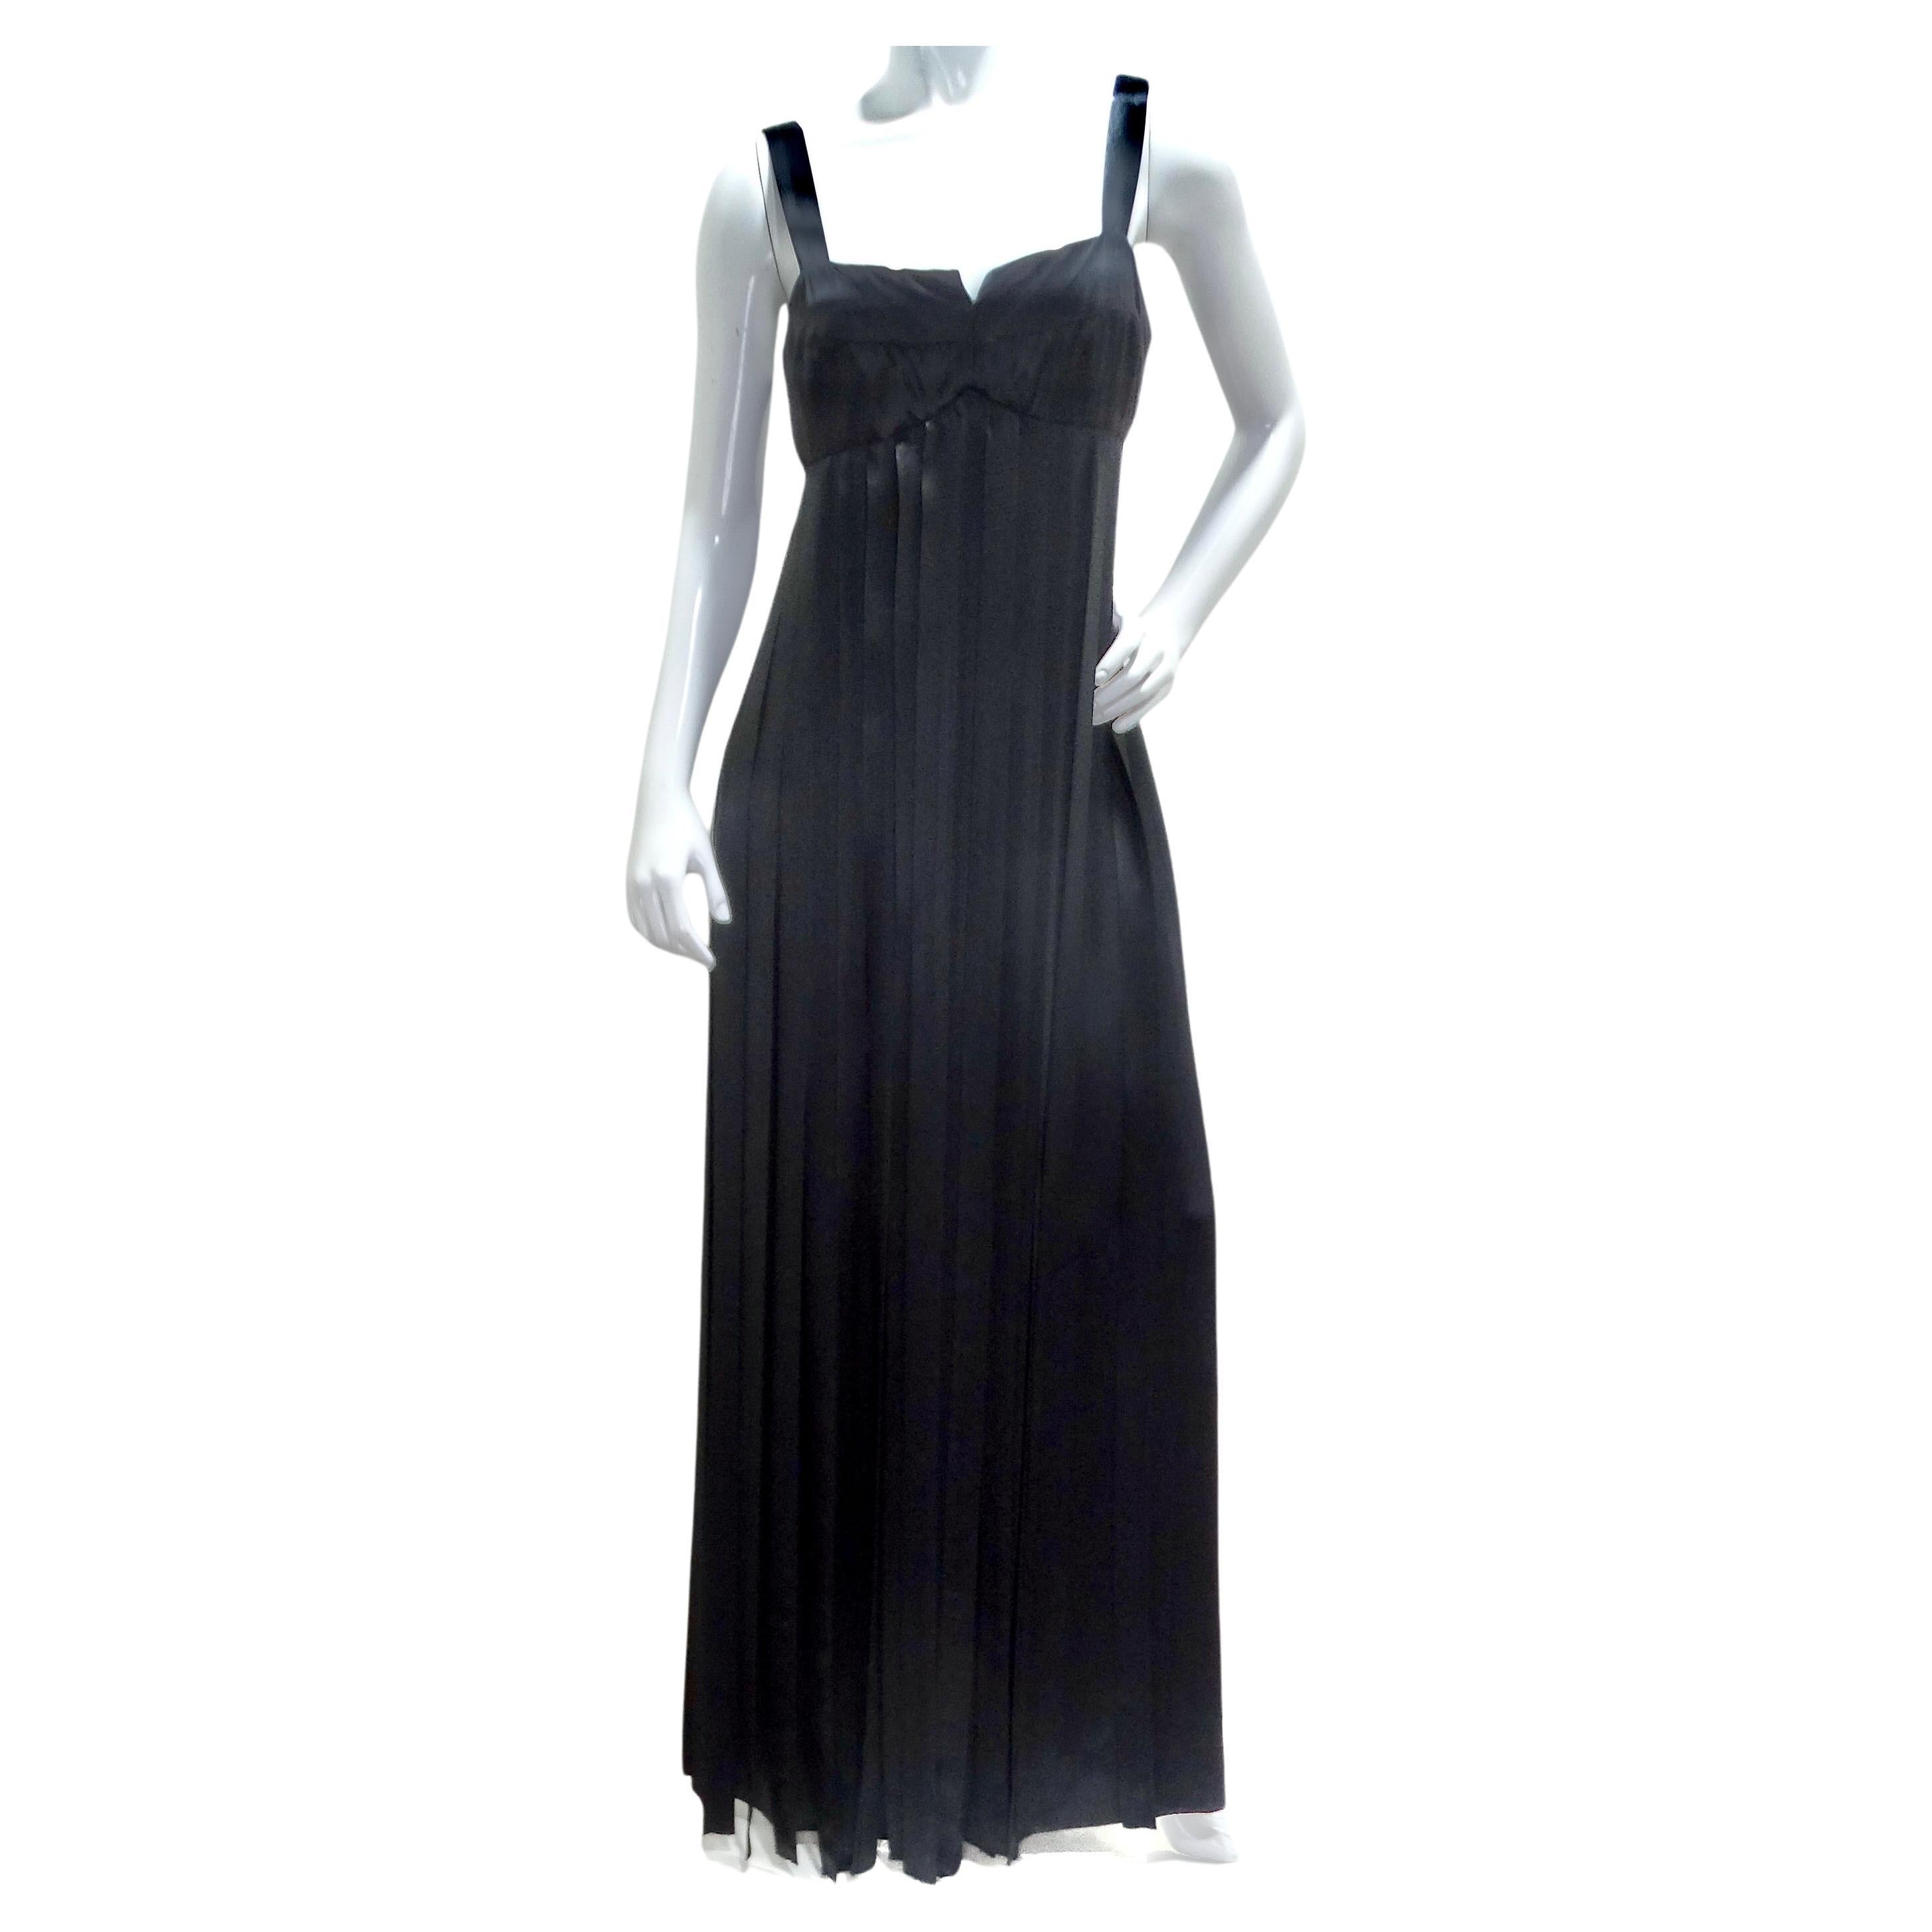 Lillie Rubin 1960s Black Carwash Maxi Dress